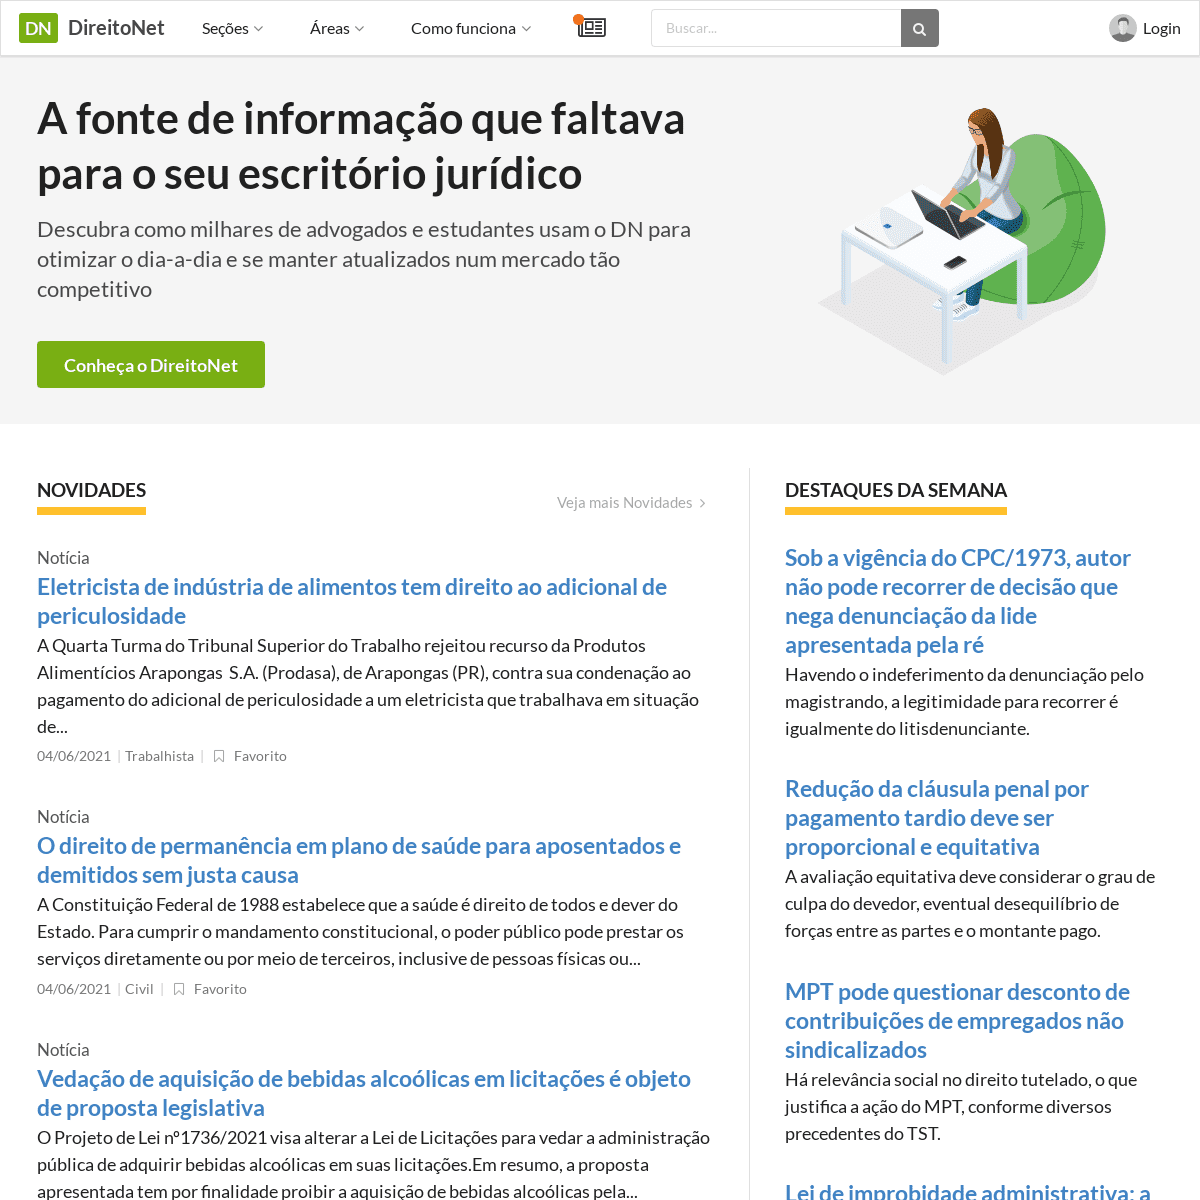 A complete backup of https://direitonet.com.br